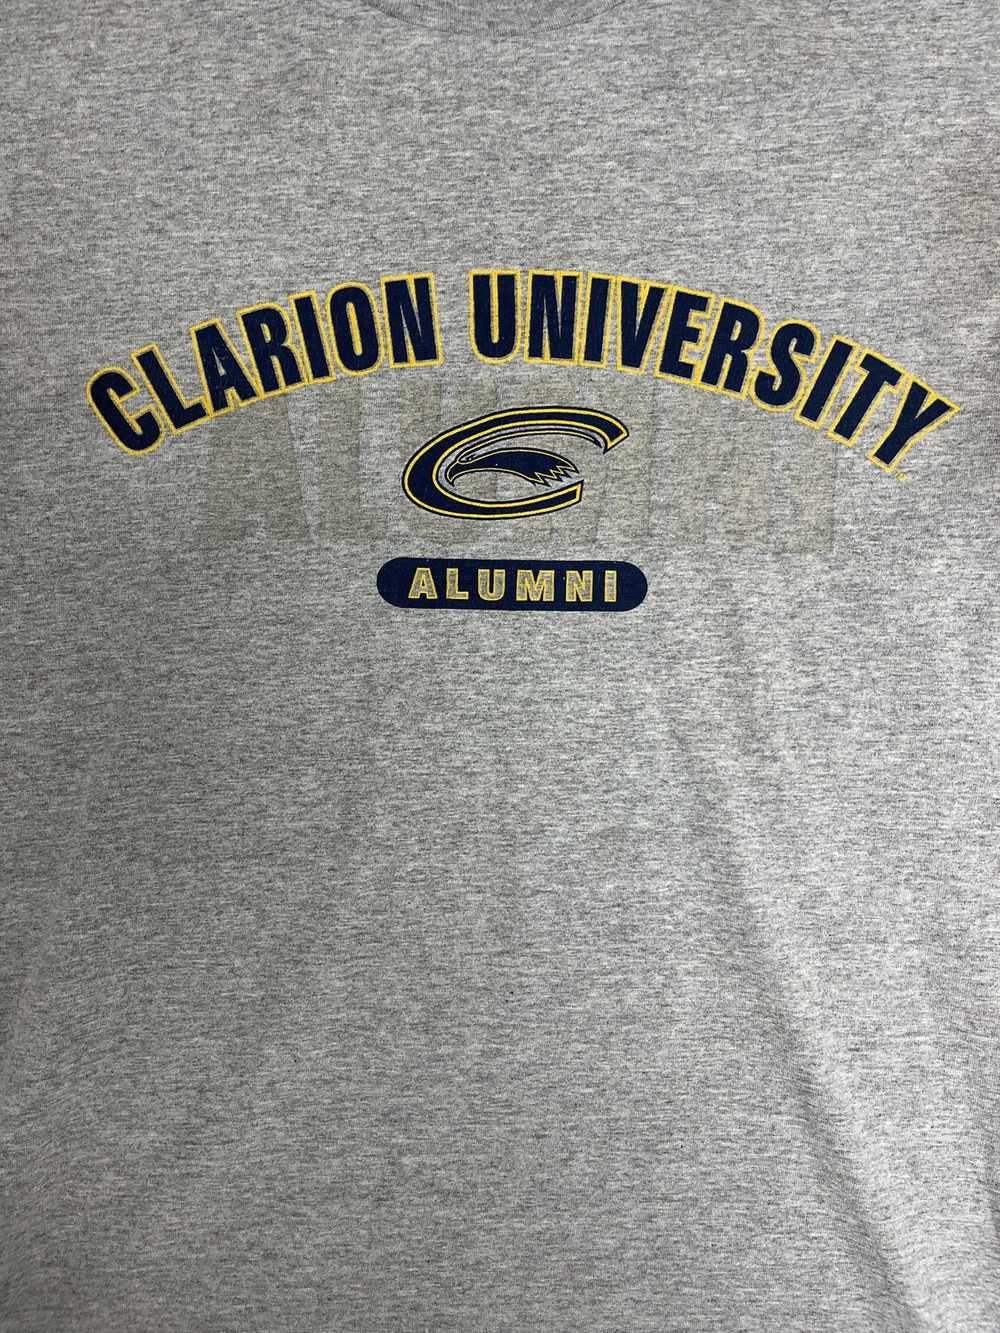 Vintage Clarion University Alumni Vintage T-Shirt - image 2